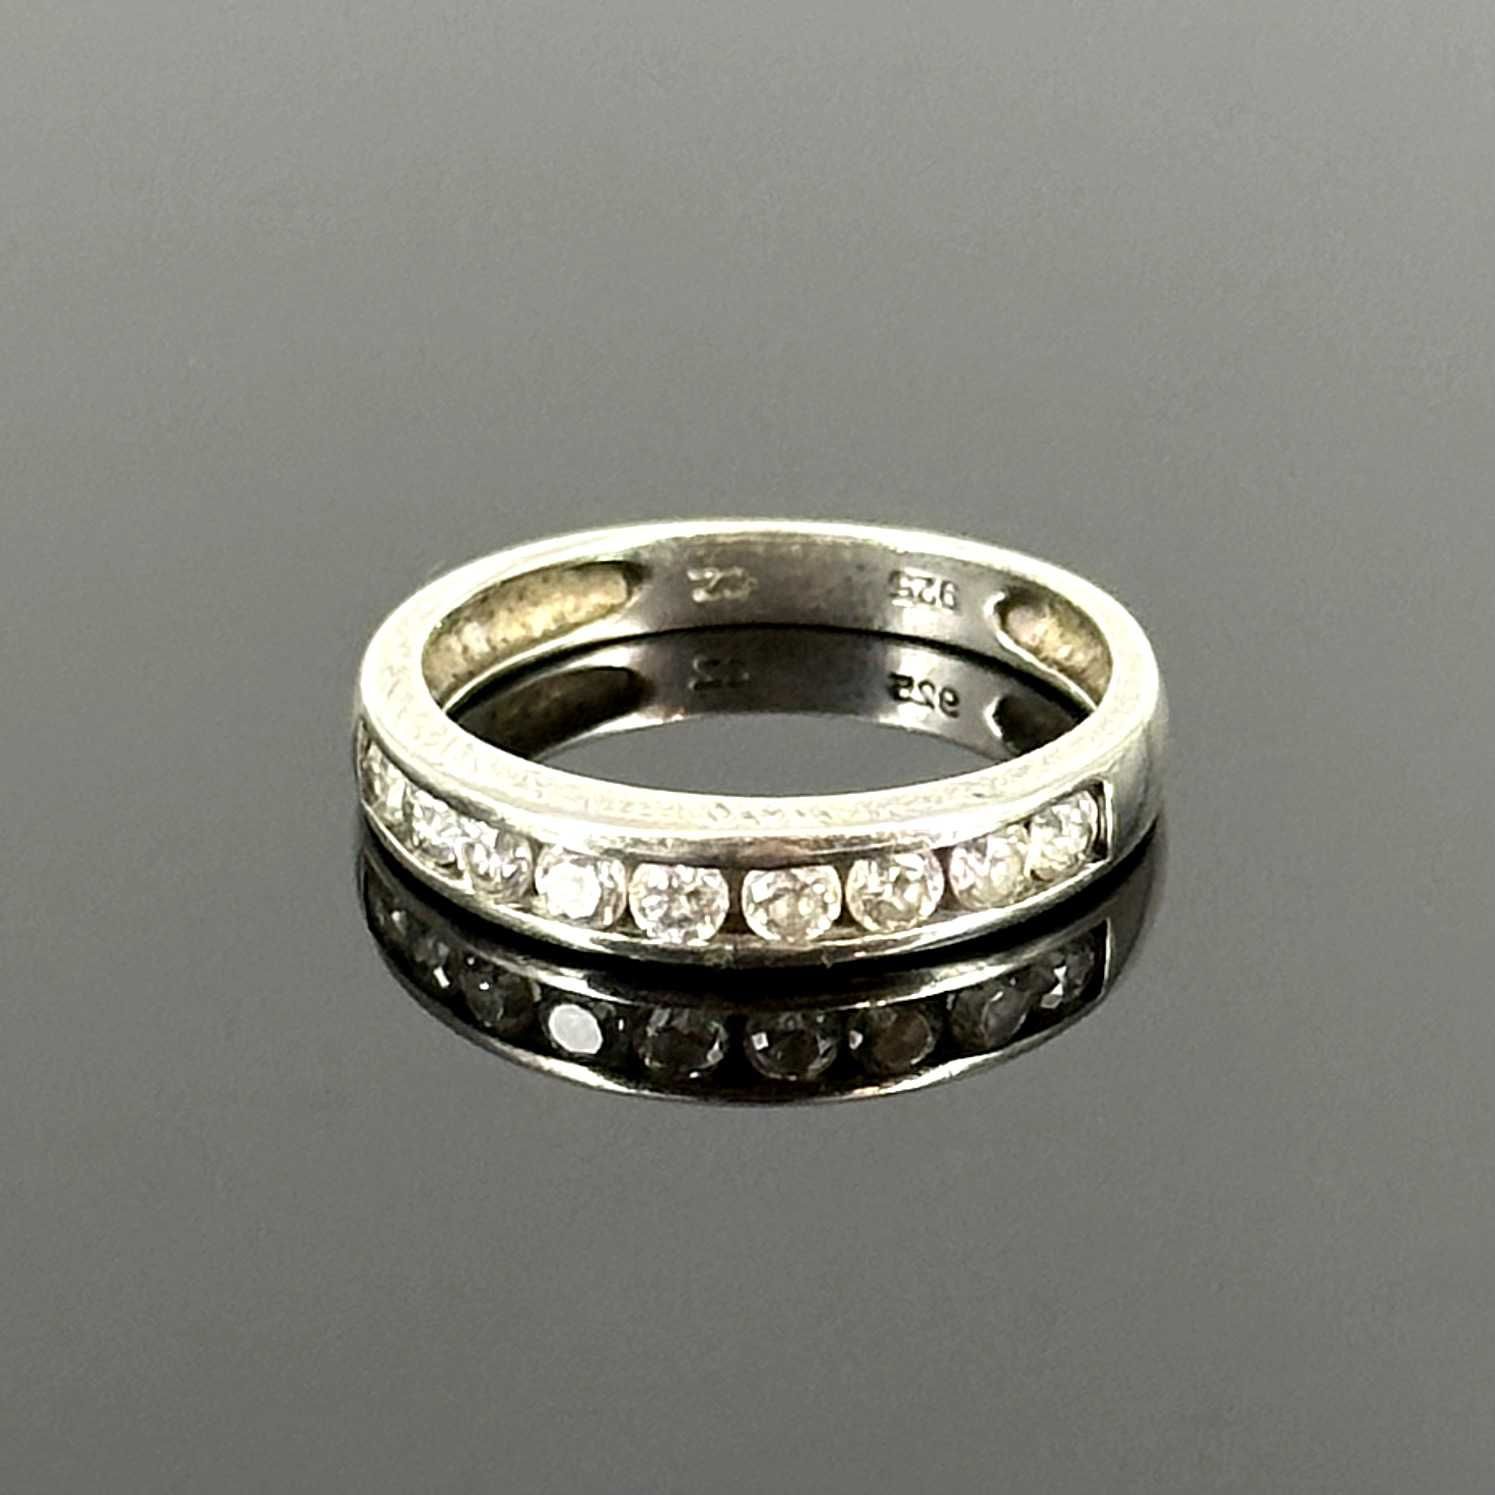 Srebro - Srebrny pierścionek z Cyrkoniami - próba srebra 925.